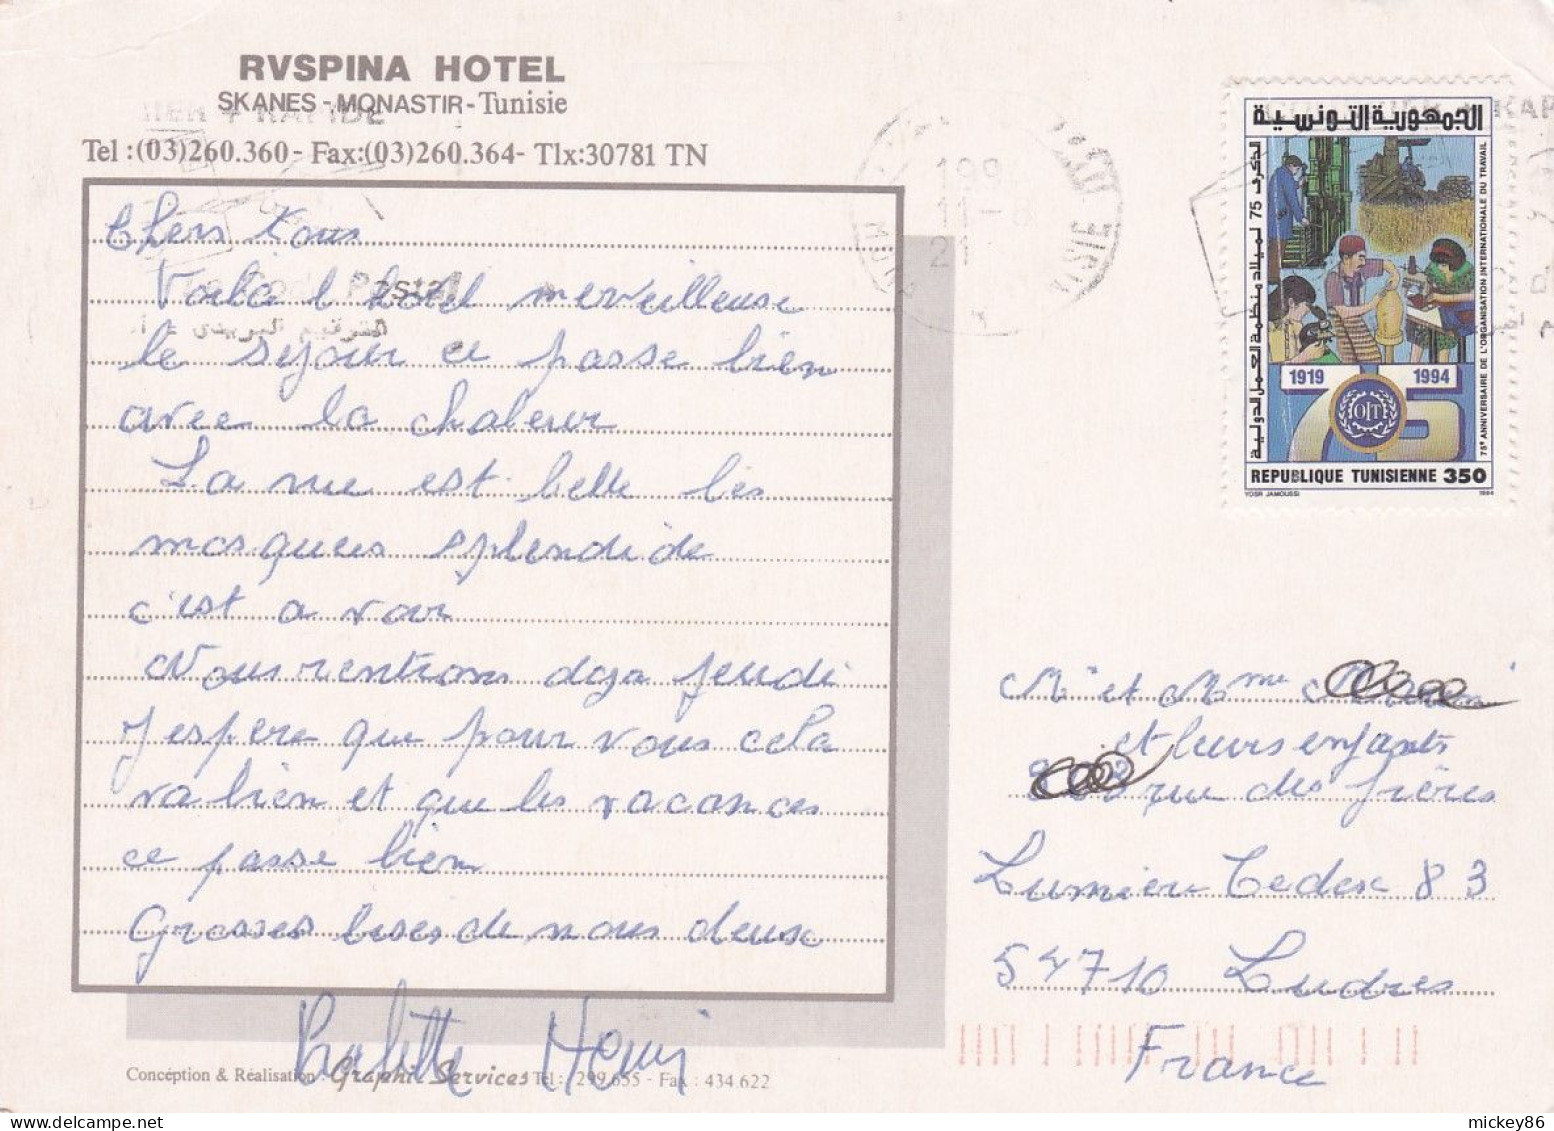 Tunisie--SKANES-MONASTIR--1994--Hotel RVSPINA  .. Beau Timbre    .....cachet - Tunisie